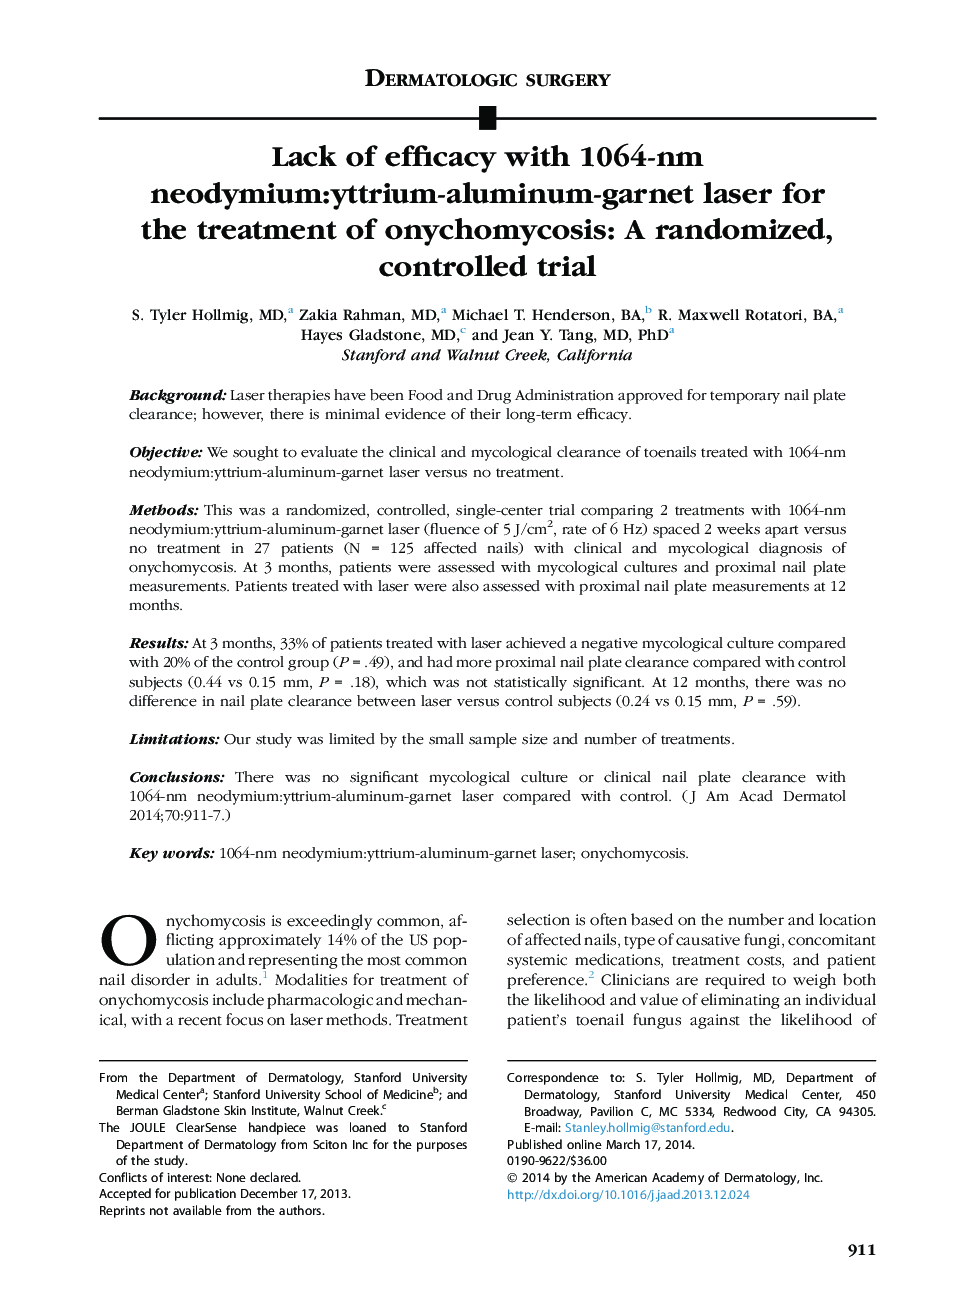 Lack of efficacy with 1064-nm neodymium:yttrium-aluminum-garnet laser for theÂ treatment of onychomycosis: A randomized, controlled trial